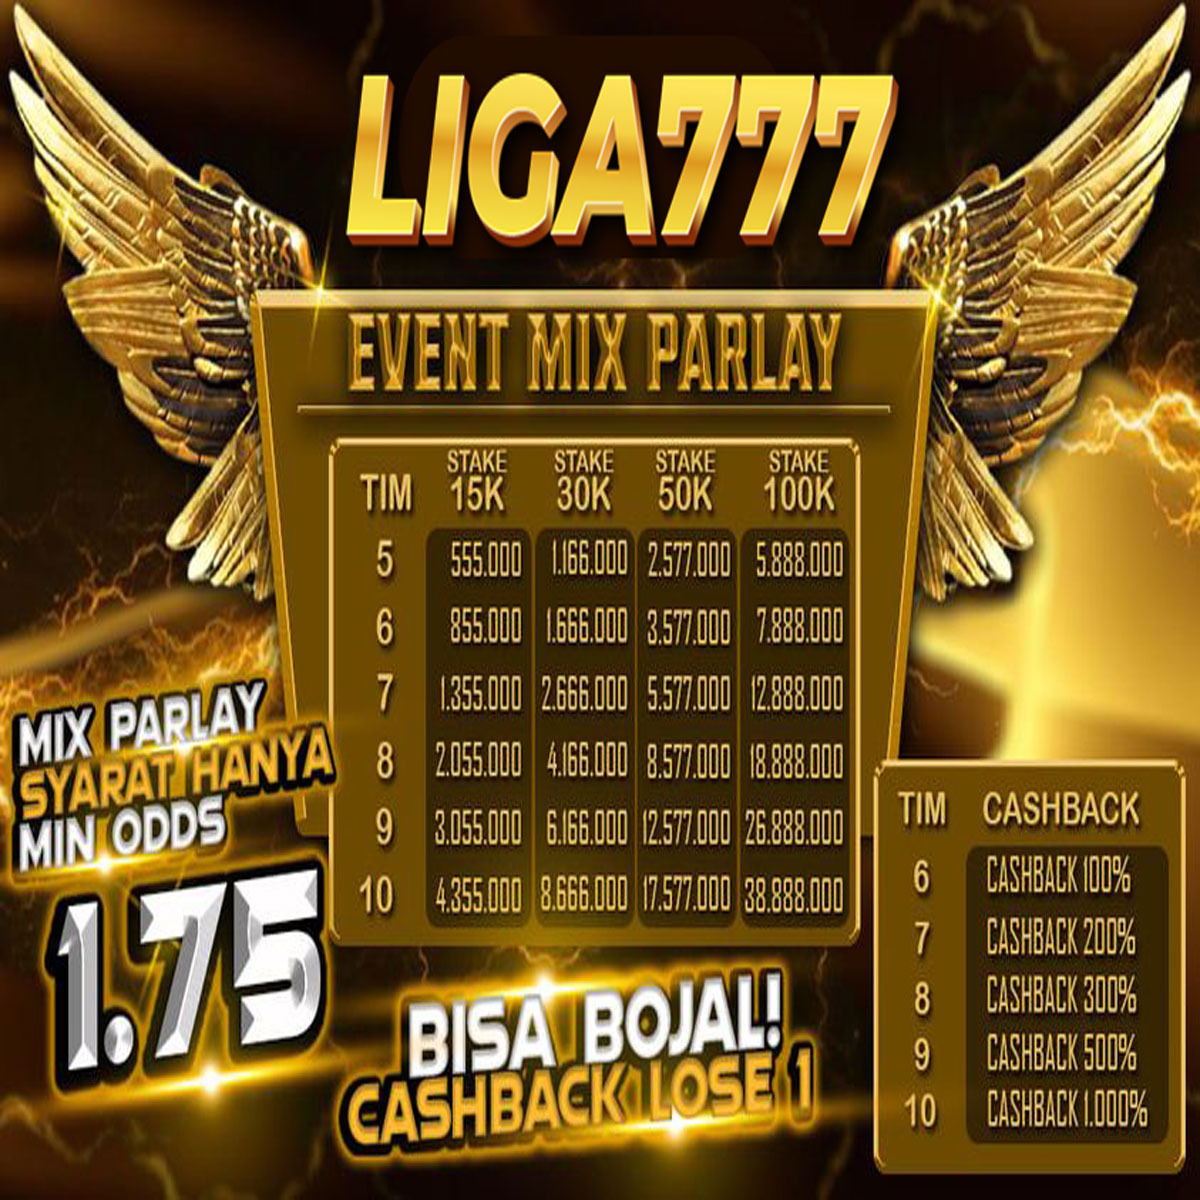 LIGA777 Bonus Mix Parlay & Cashback Sportsbook